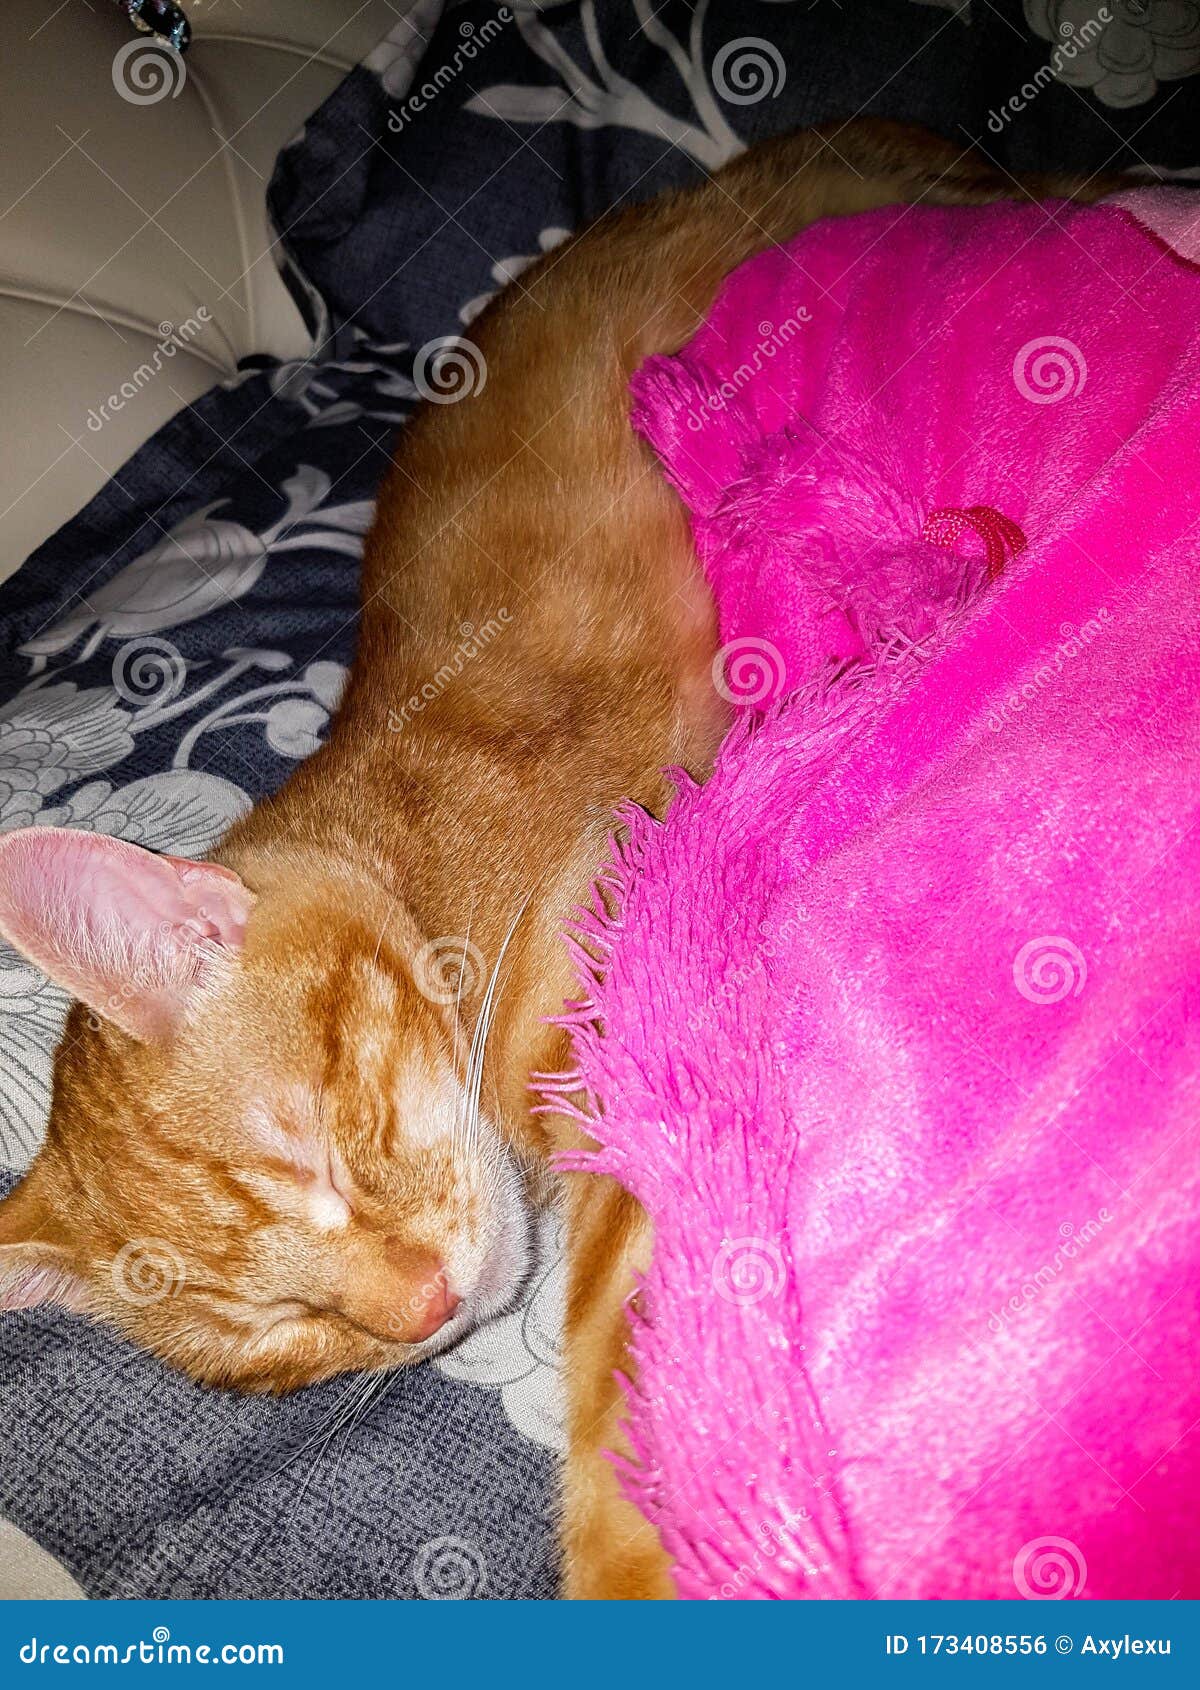 Sleeping Orange Male Cat With Pink Paws Stock Photo Image of orange